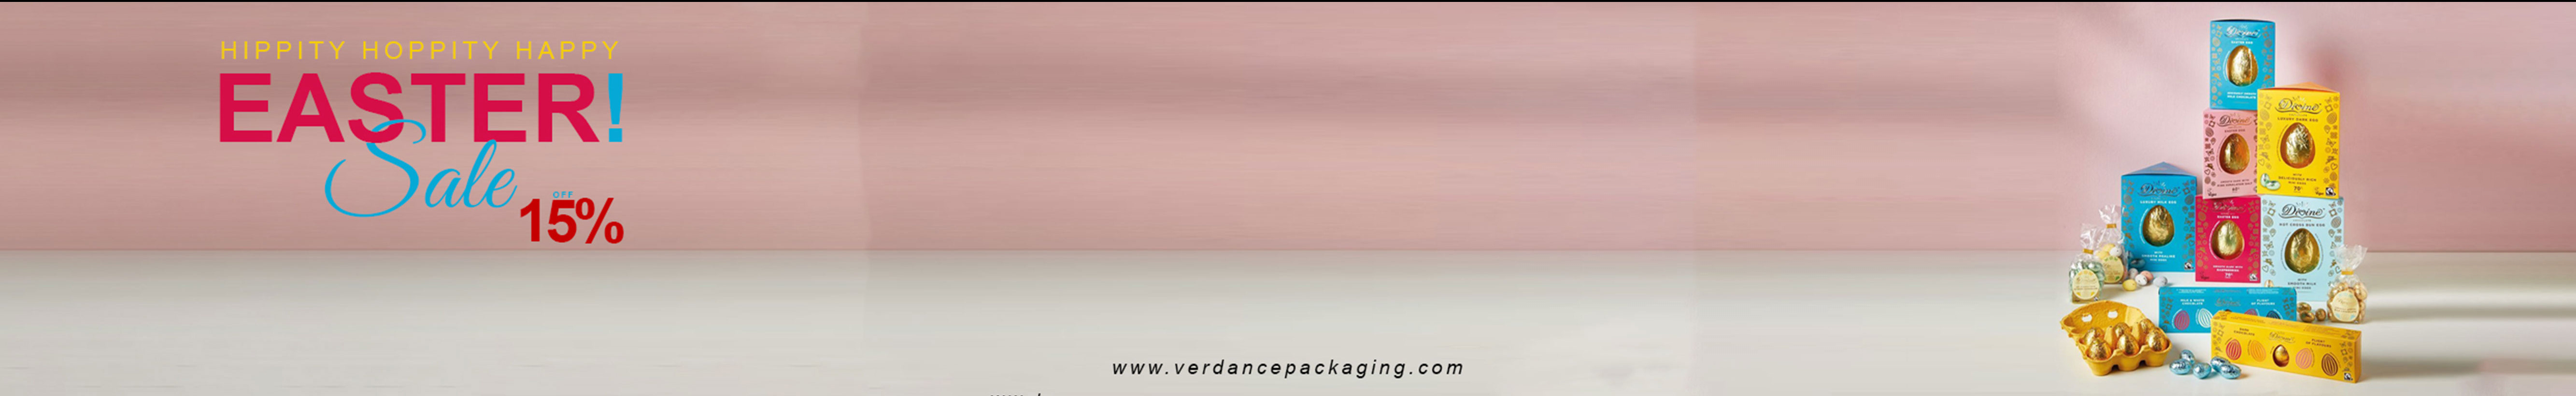 Profielbanner van Verdance Packaging